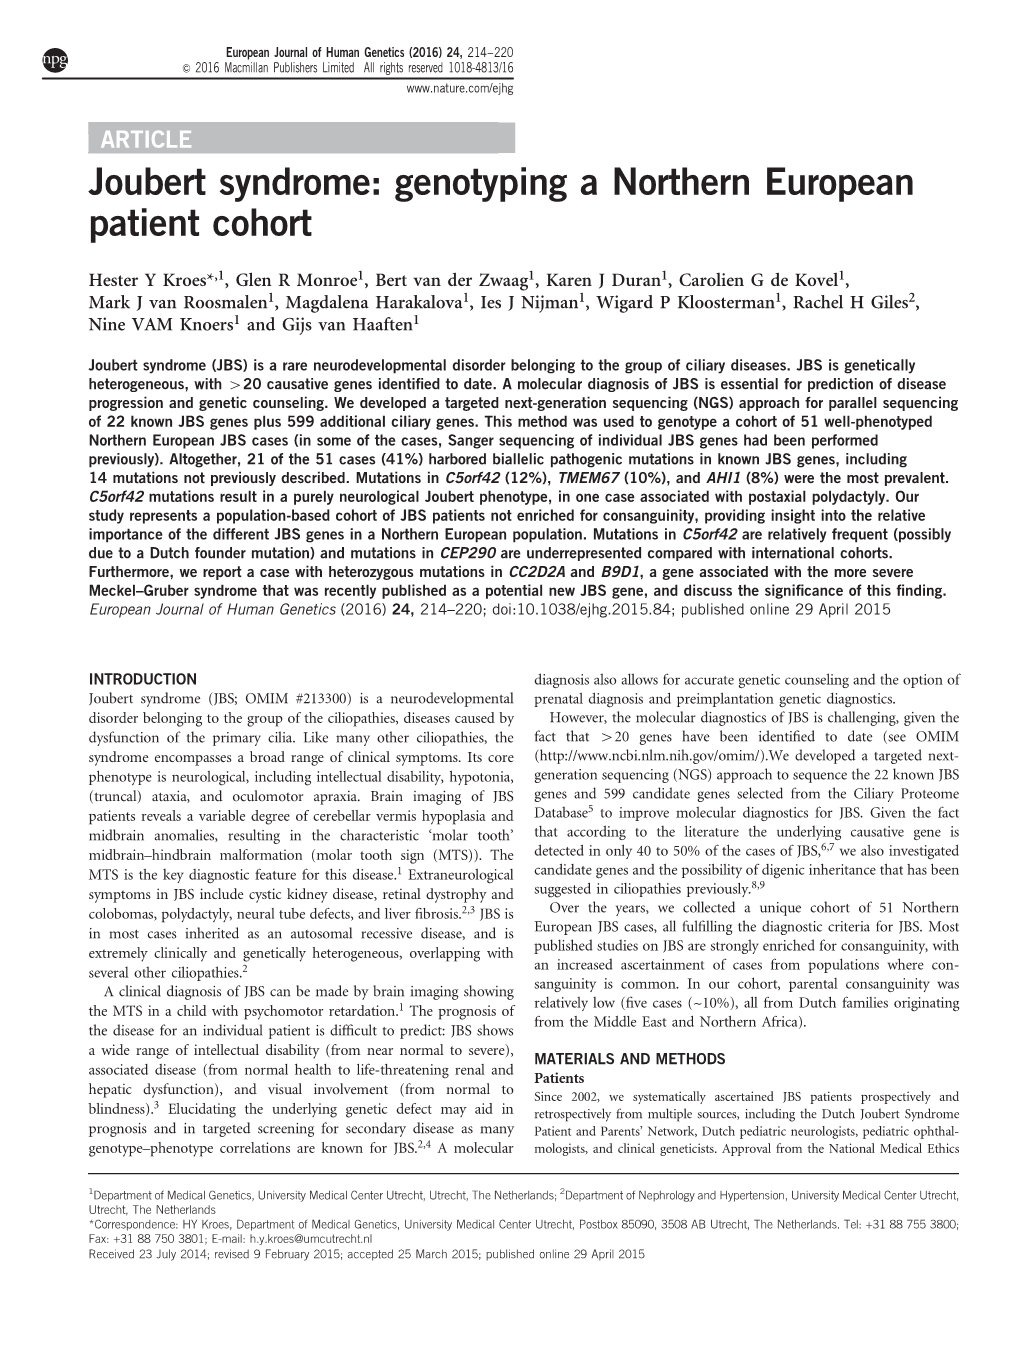 Joubert Syndrome: Genotyping a Northern European Patient Cohort